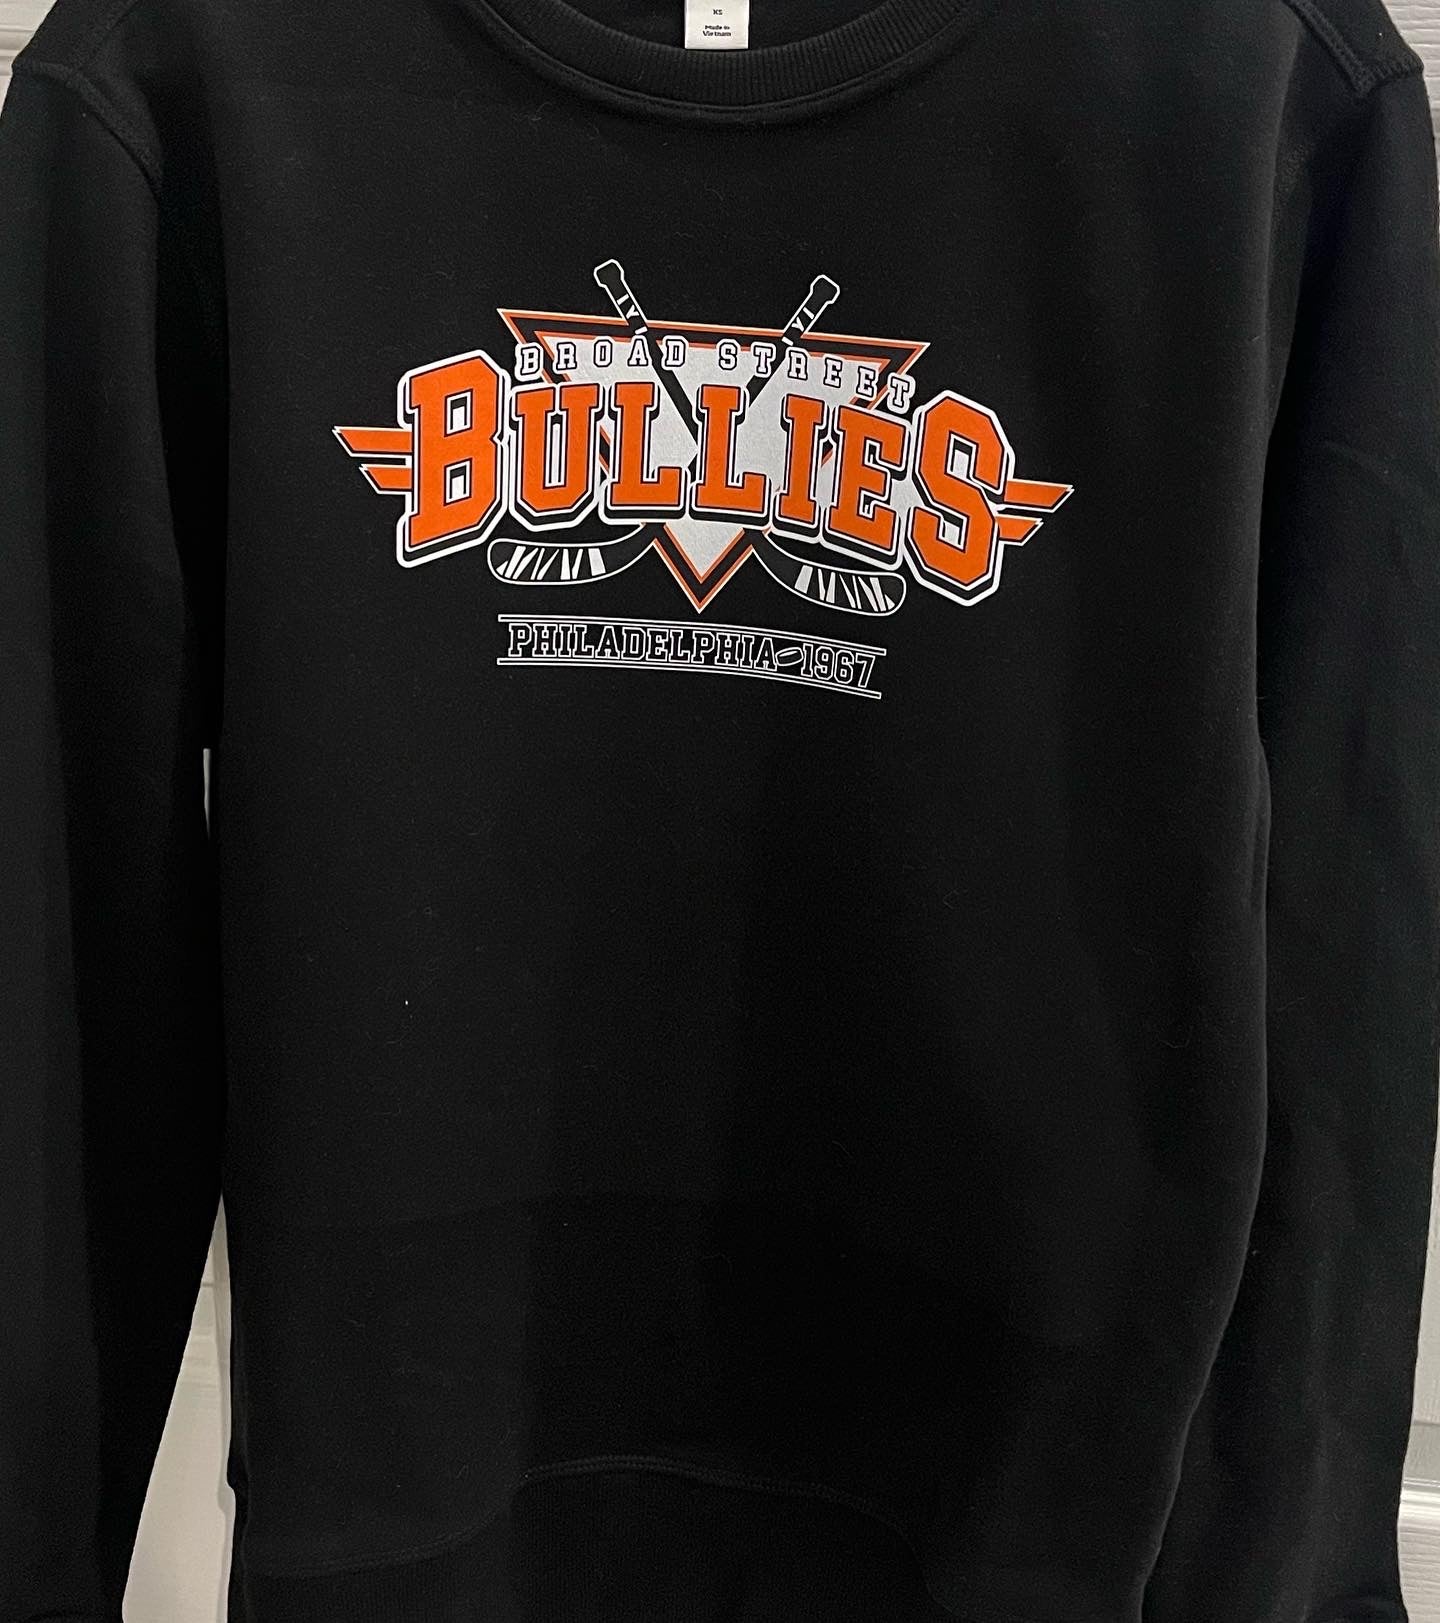 Broad Street Bullies sweatshirt - solid black